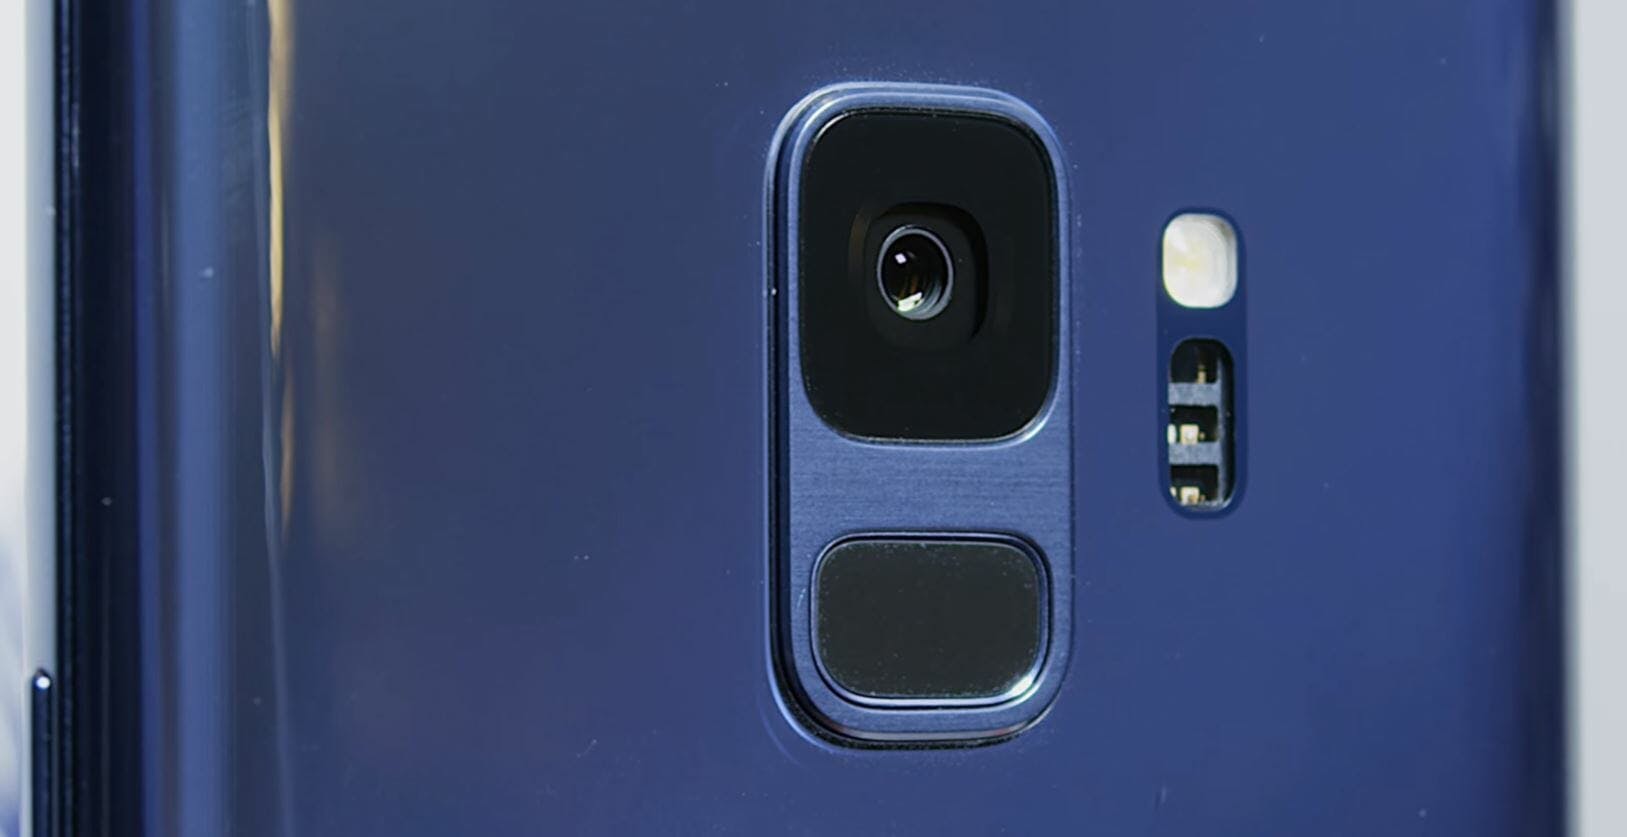 samsung galaxy s9 dual-aperture camera lens